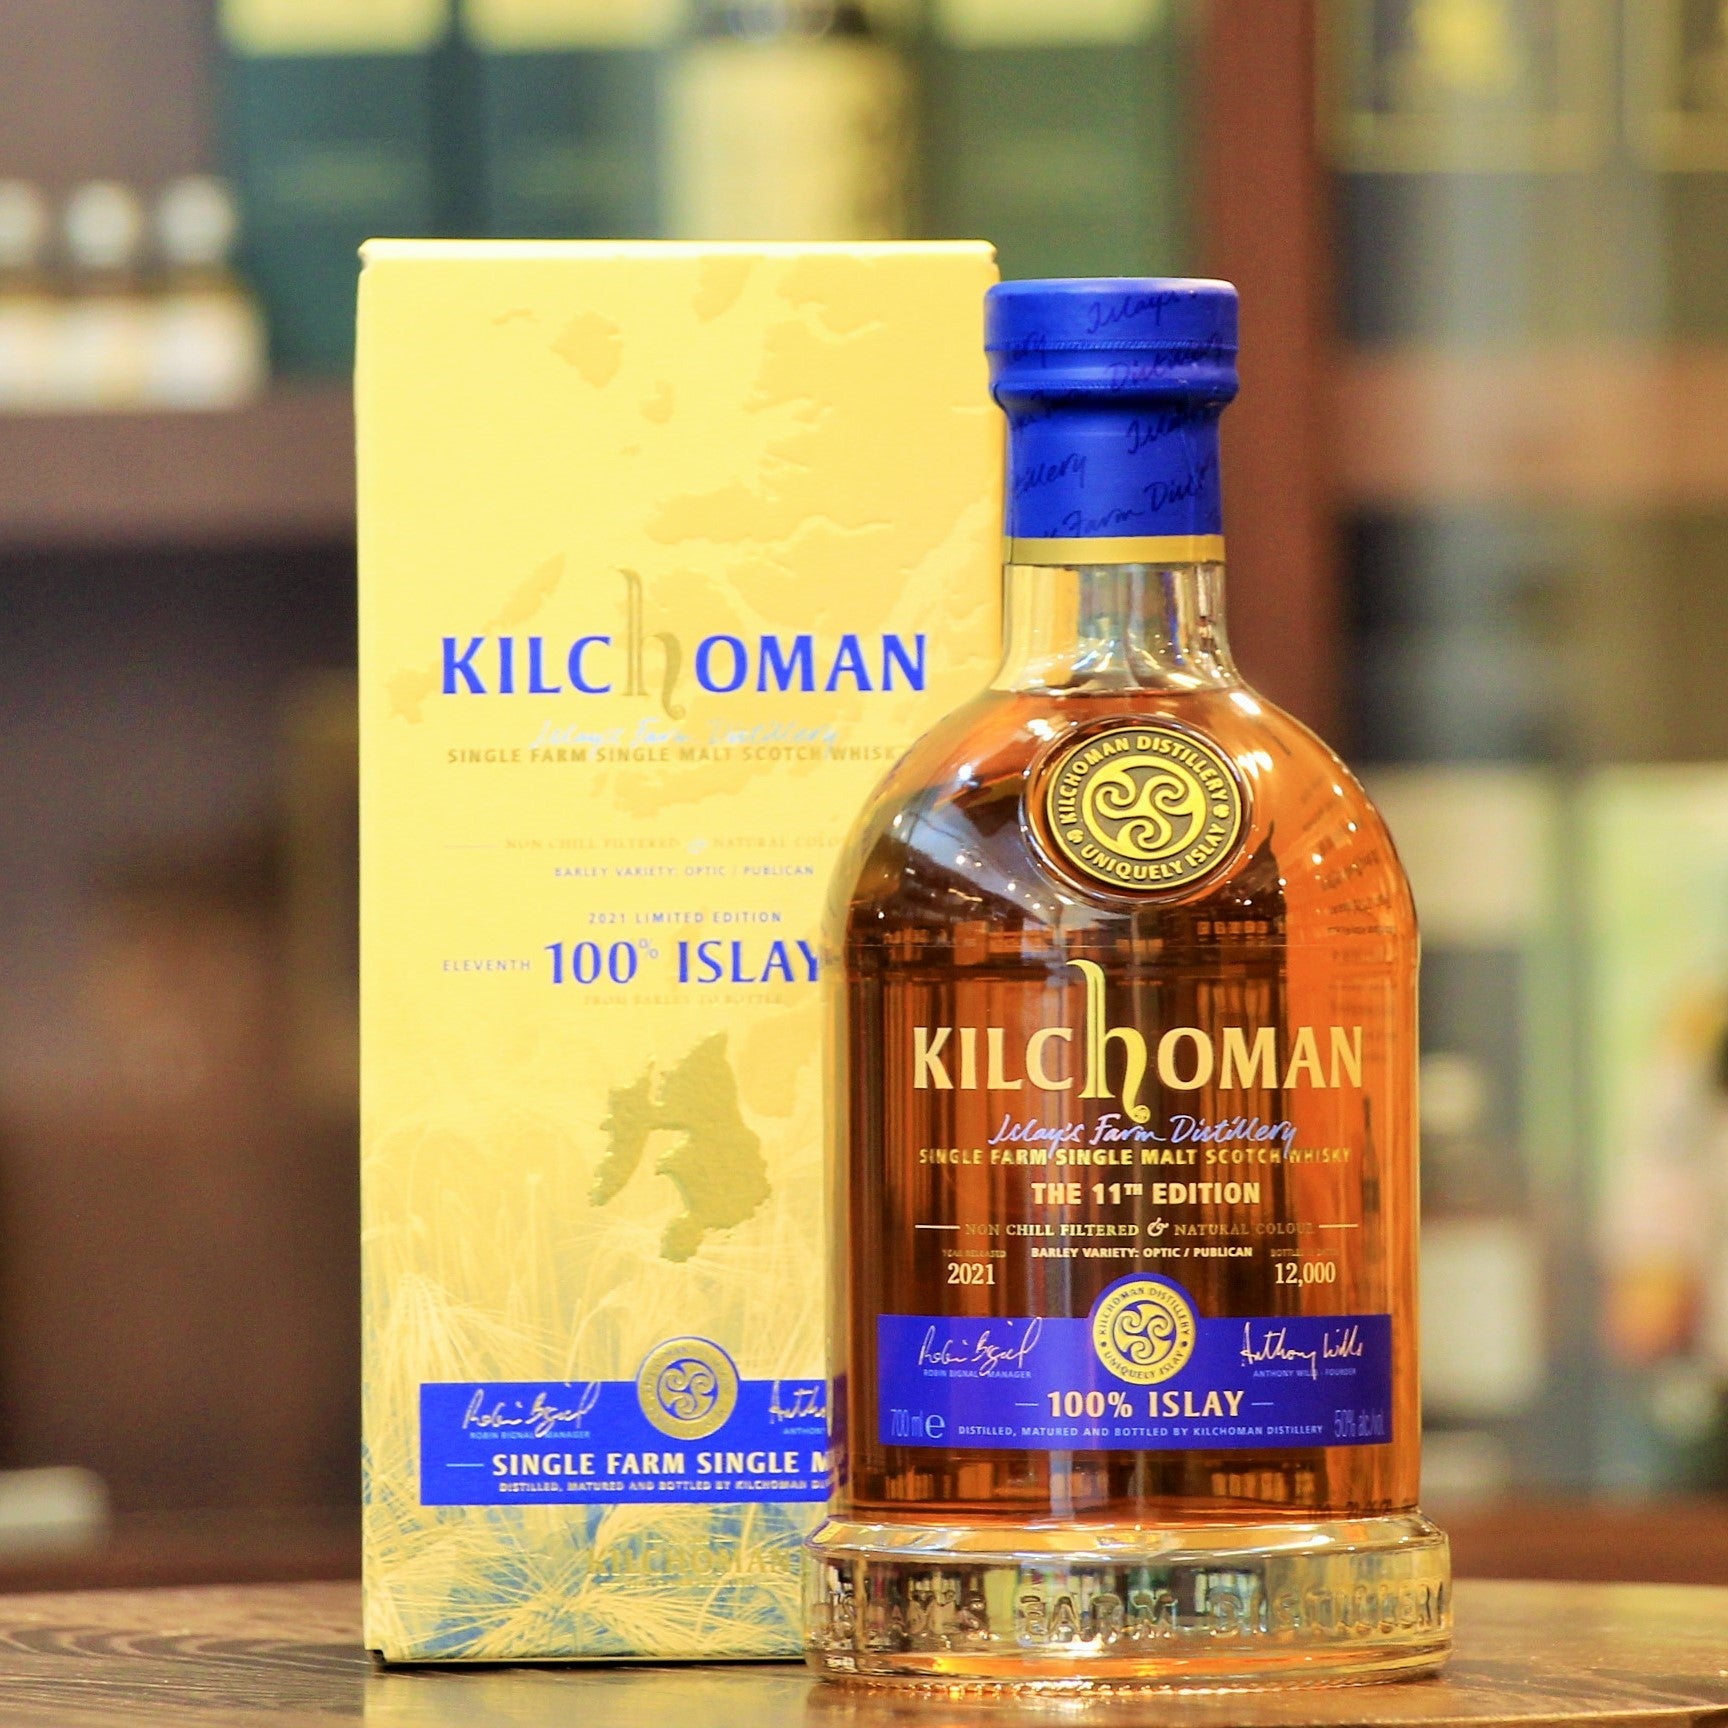 Kilchoman 100% Islay 11th Edition (2021) Single Malt Scotch Whisky